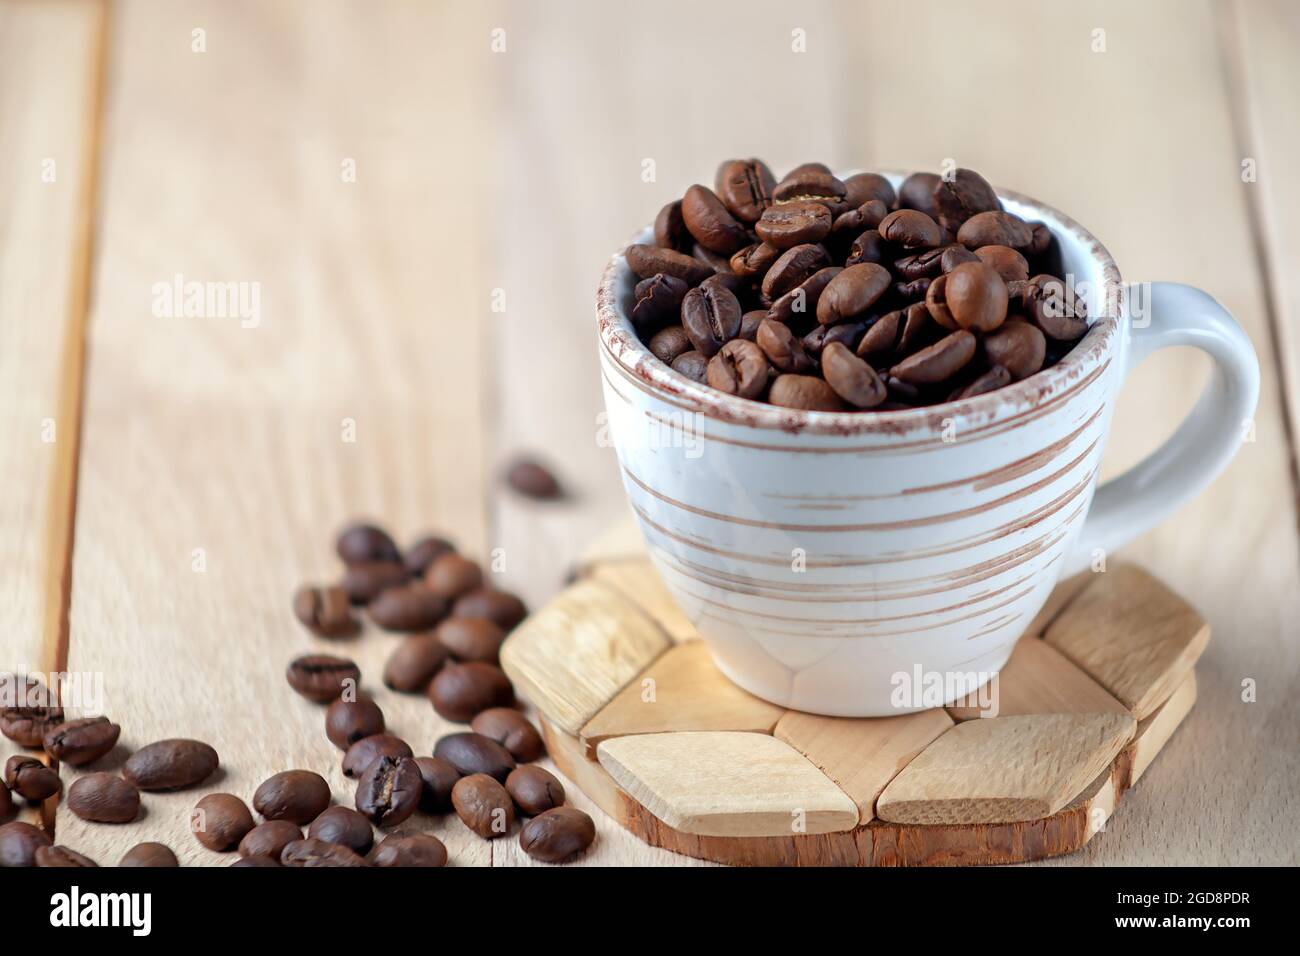 Immagine simbolica del caffè. Chicchi di caffè arrostiti in una tazza di ceramica. Spazio di copia. Foto Stock